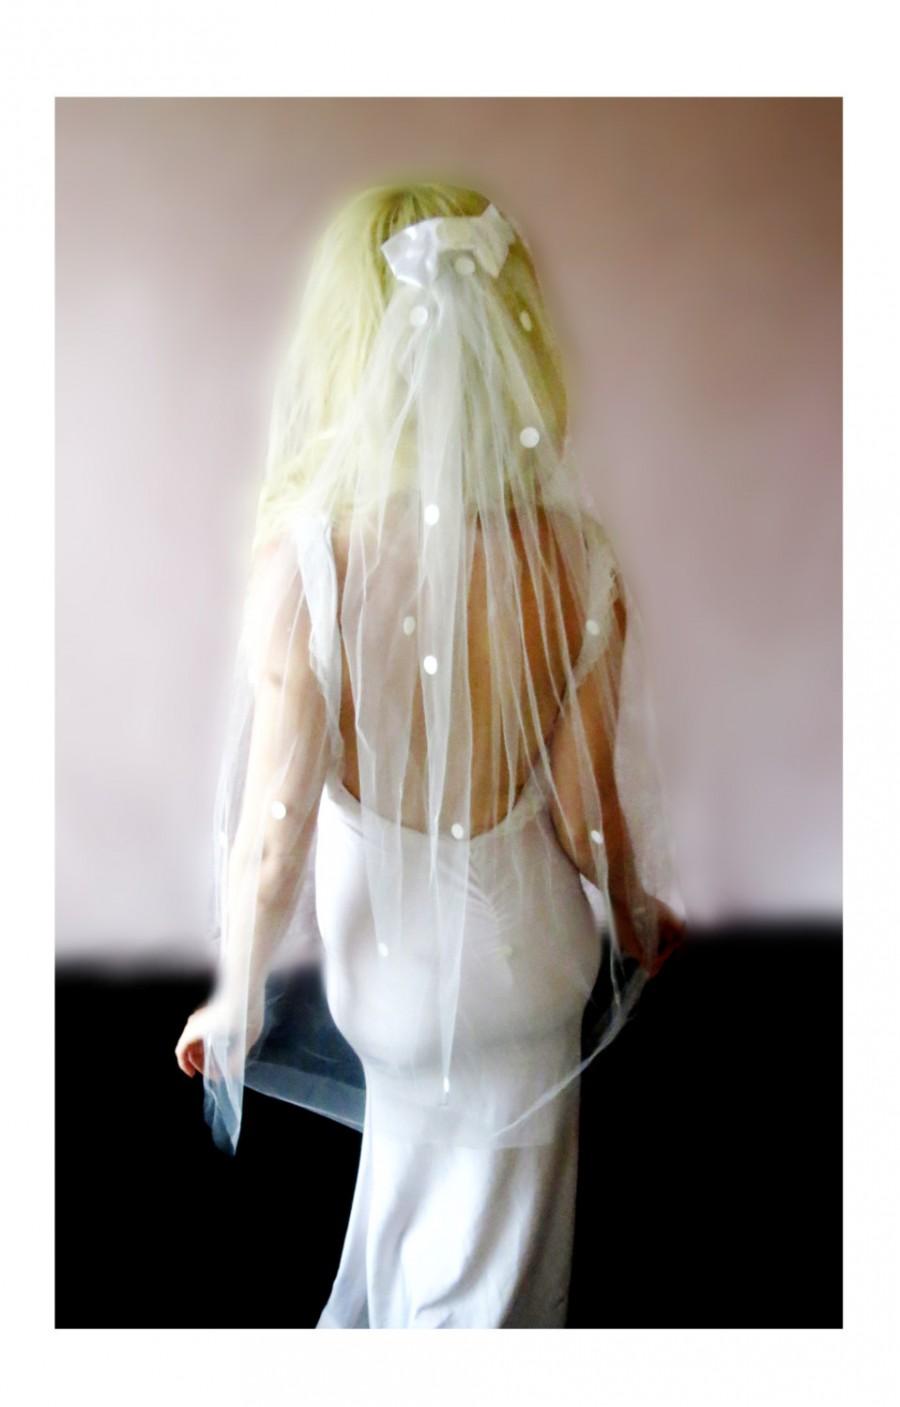 Hochzeit - New 2017 Collection Polka dot bow veil 1960's mod vintage inspired retro hepburn wedding bridal